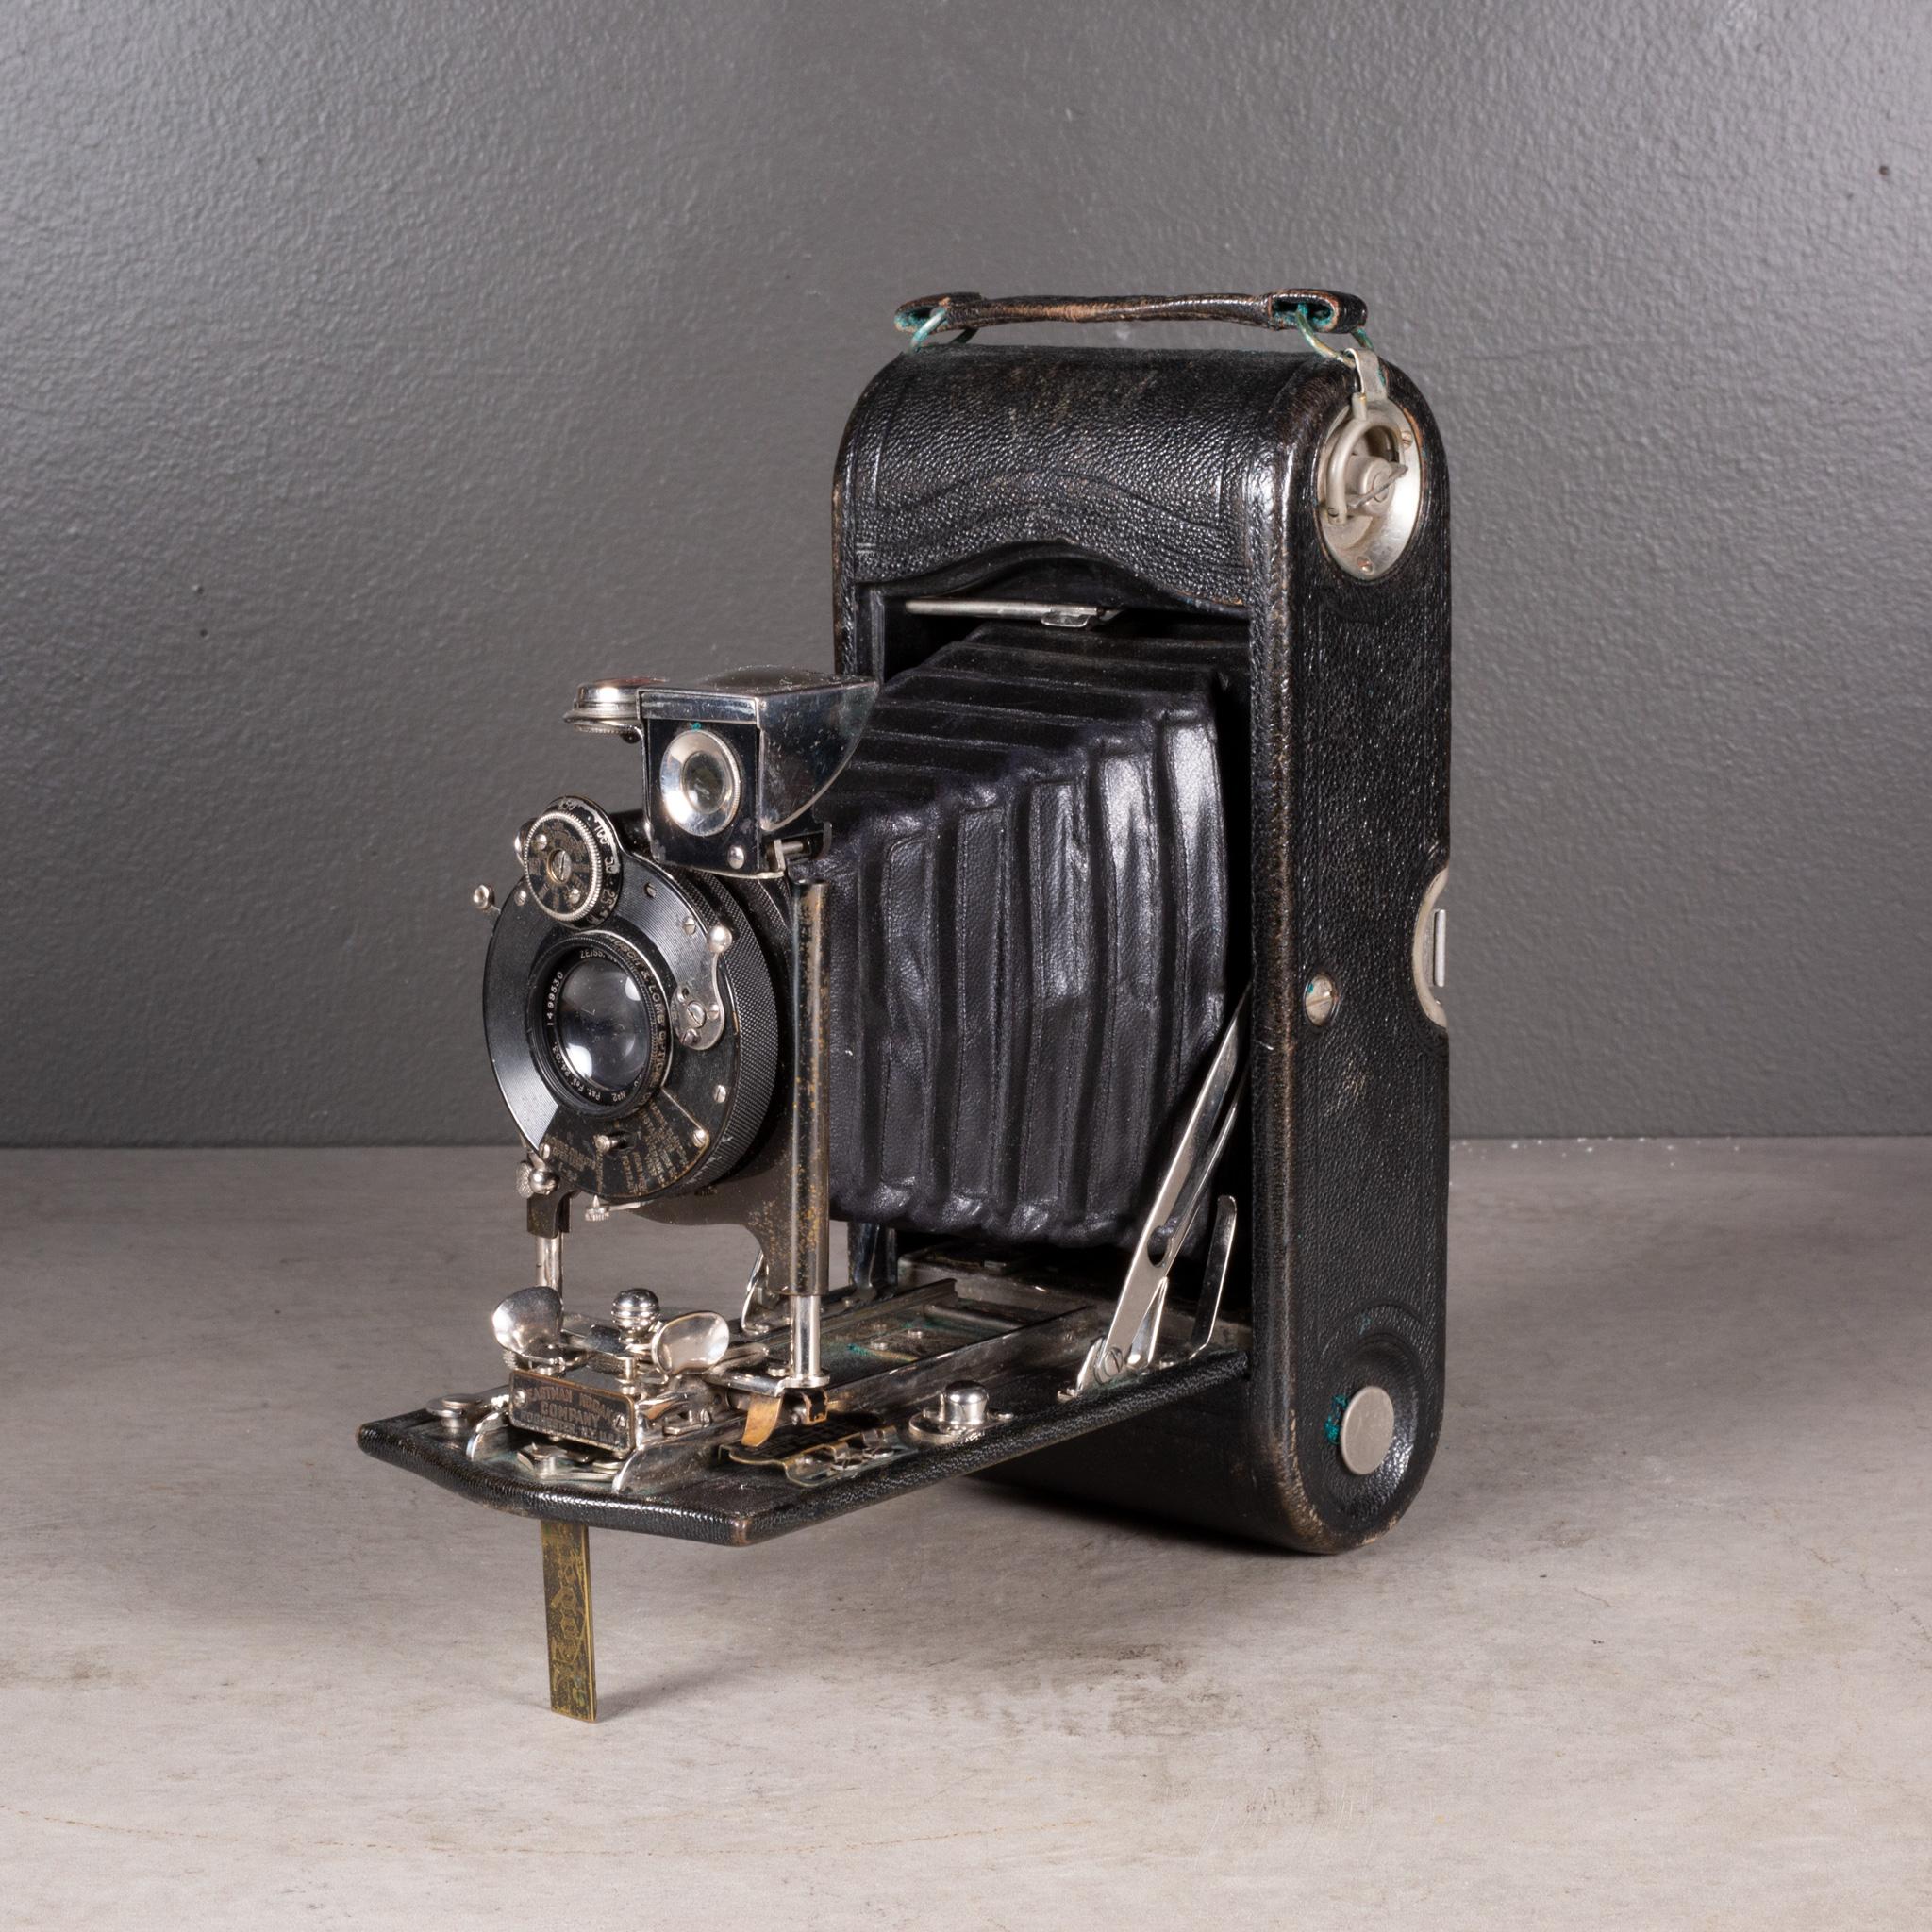 1927 camera